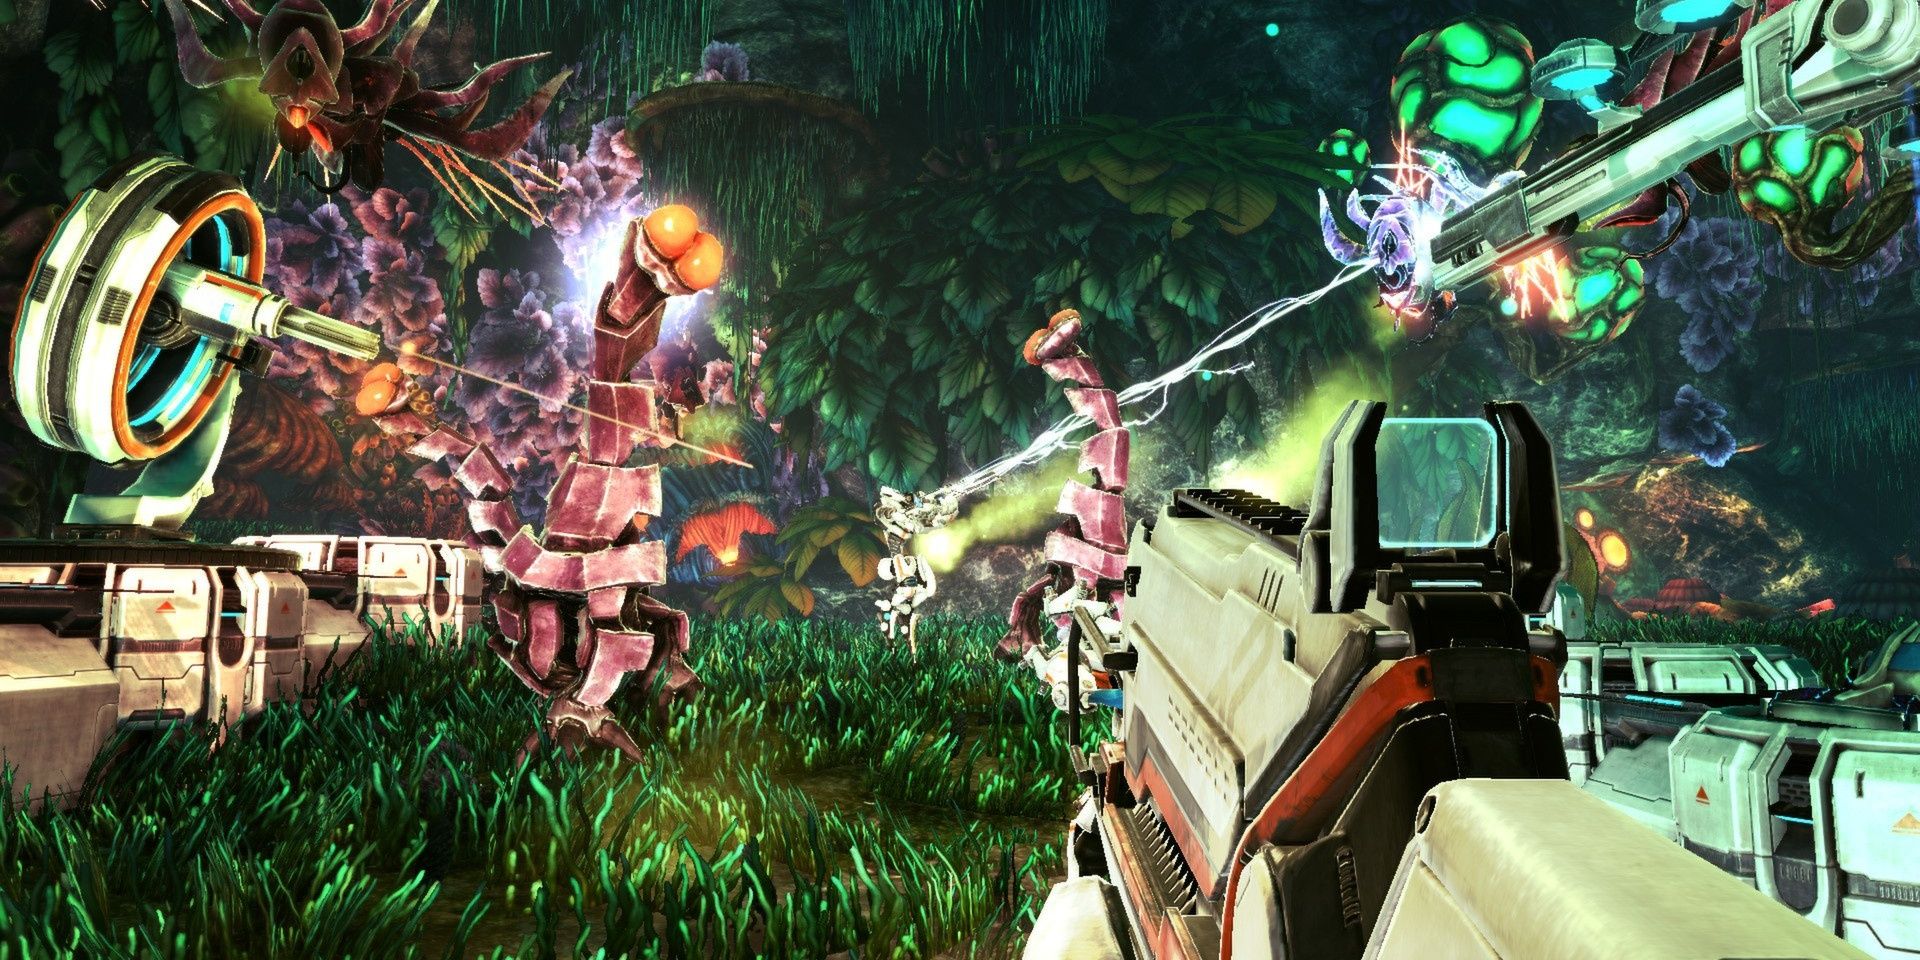 A screenshot showing gameplay in Sanctum 2